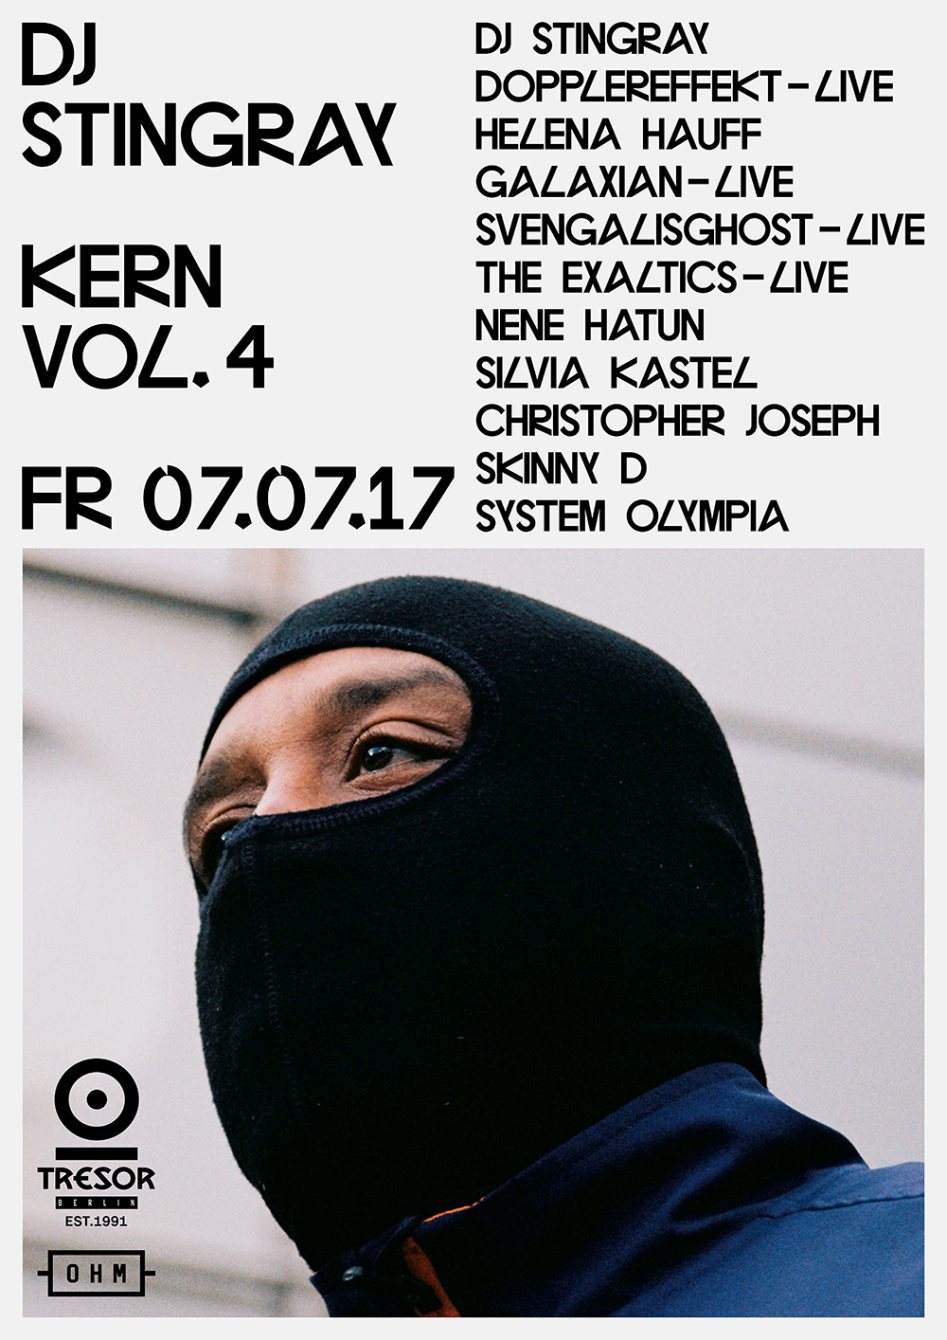 Tresor & DJ Stingray Pres. Kern Vol. 4 Record Release - フライヤー表